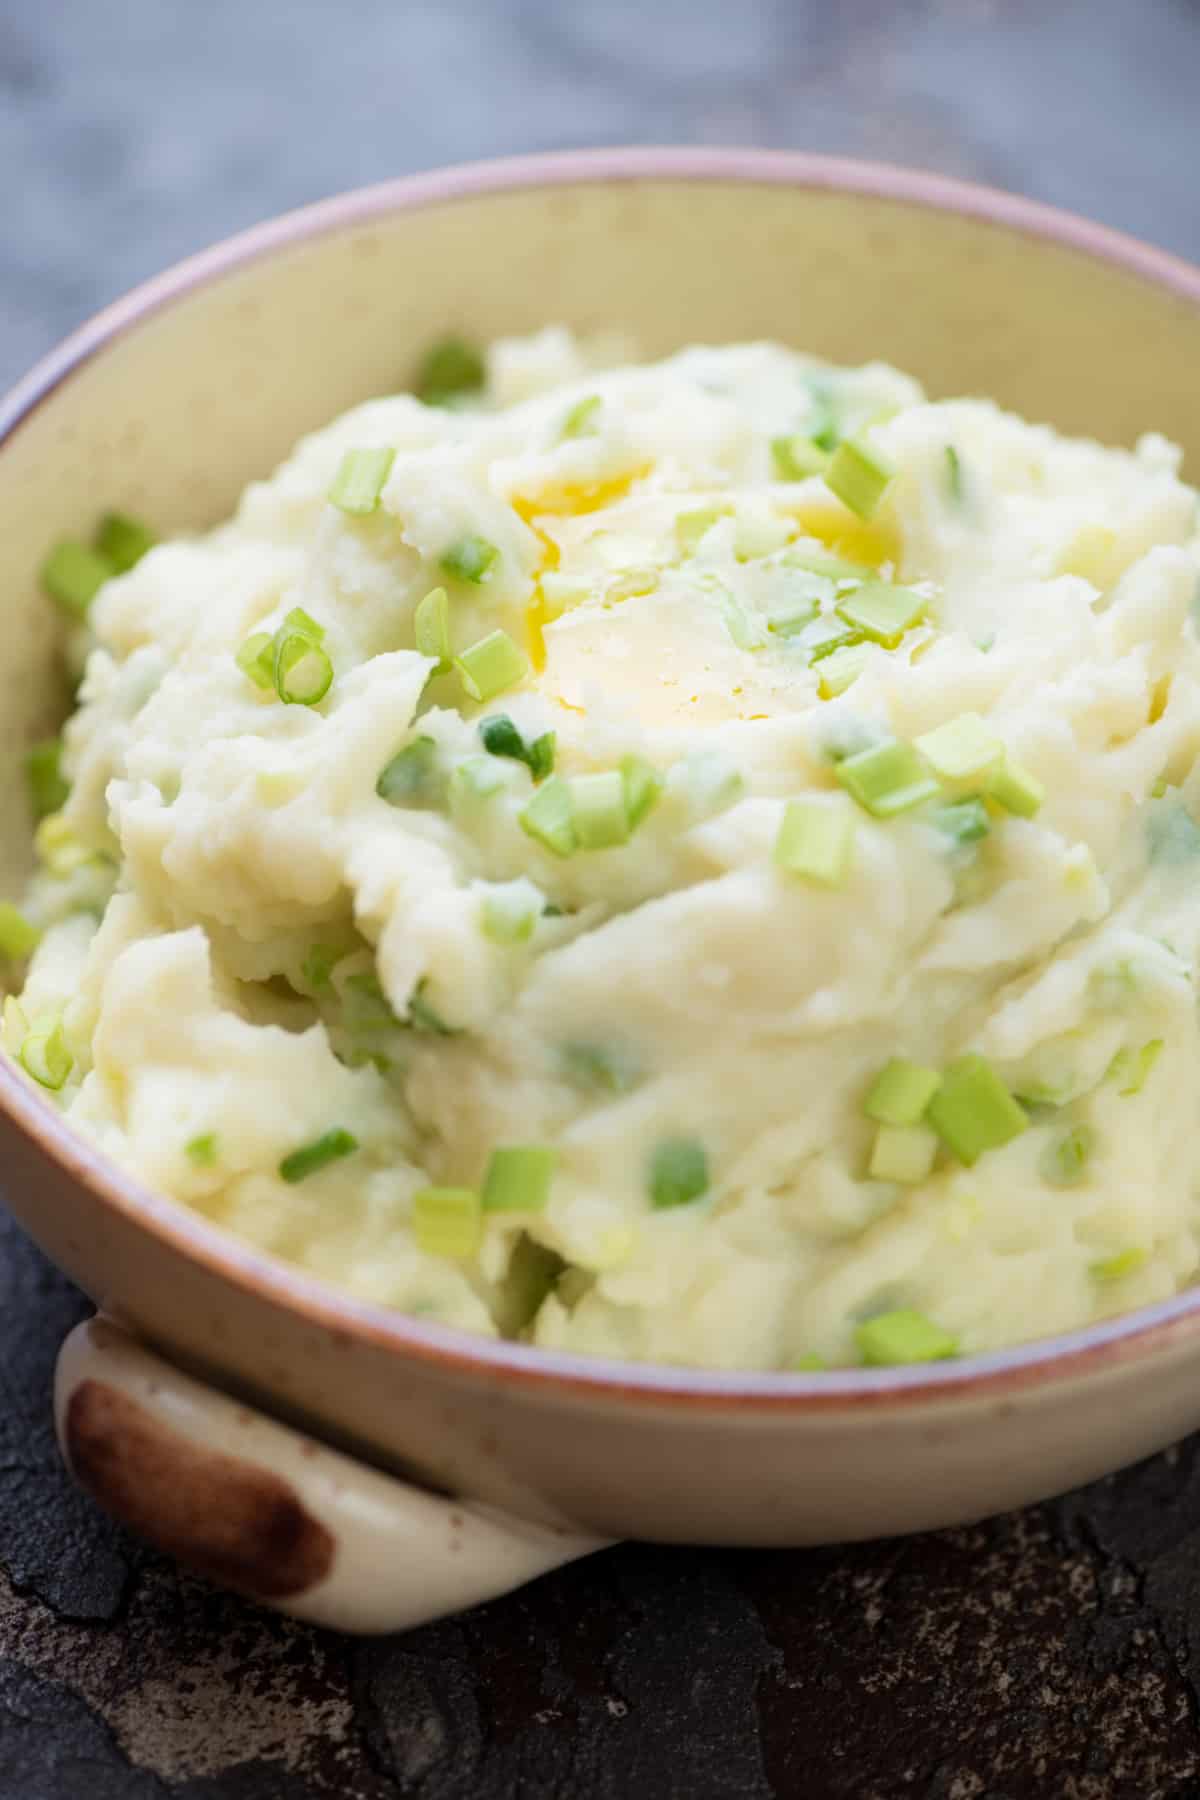 Irish champ or traditional mashed potato with green onion.